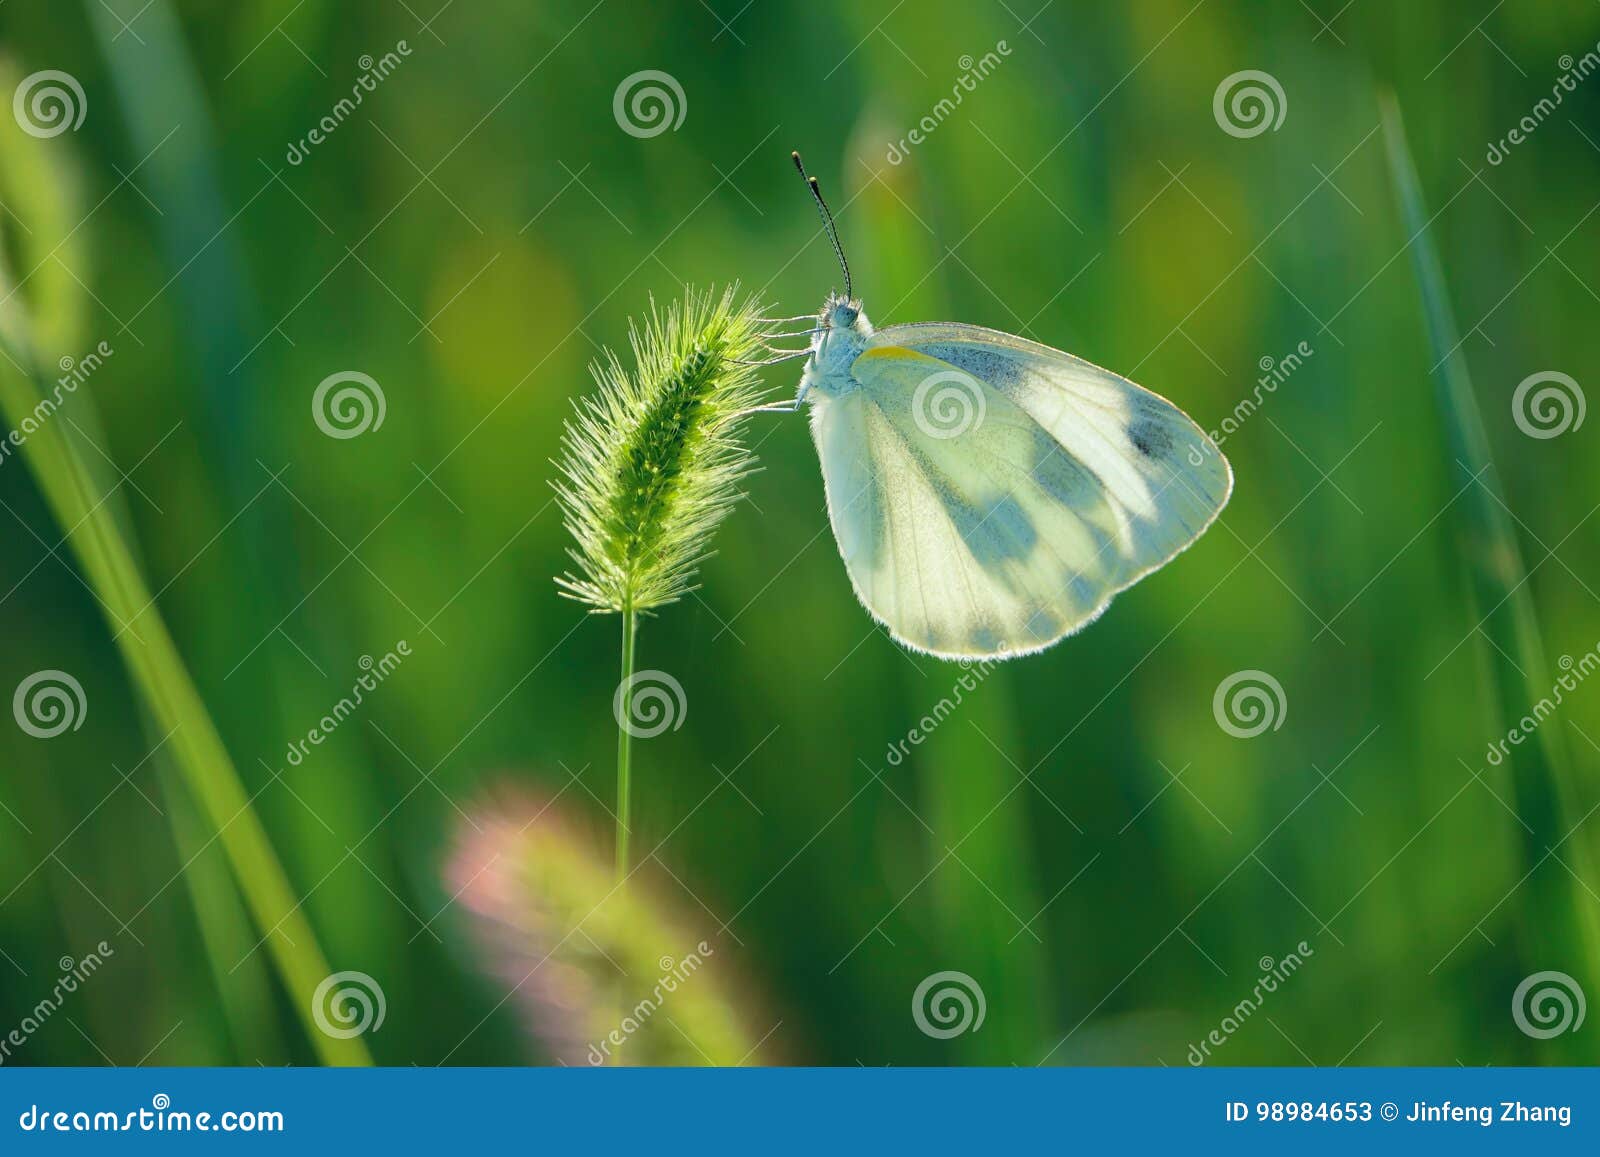 pieridae butterfly